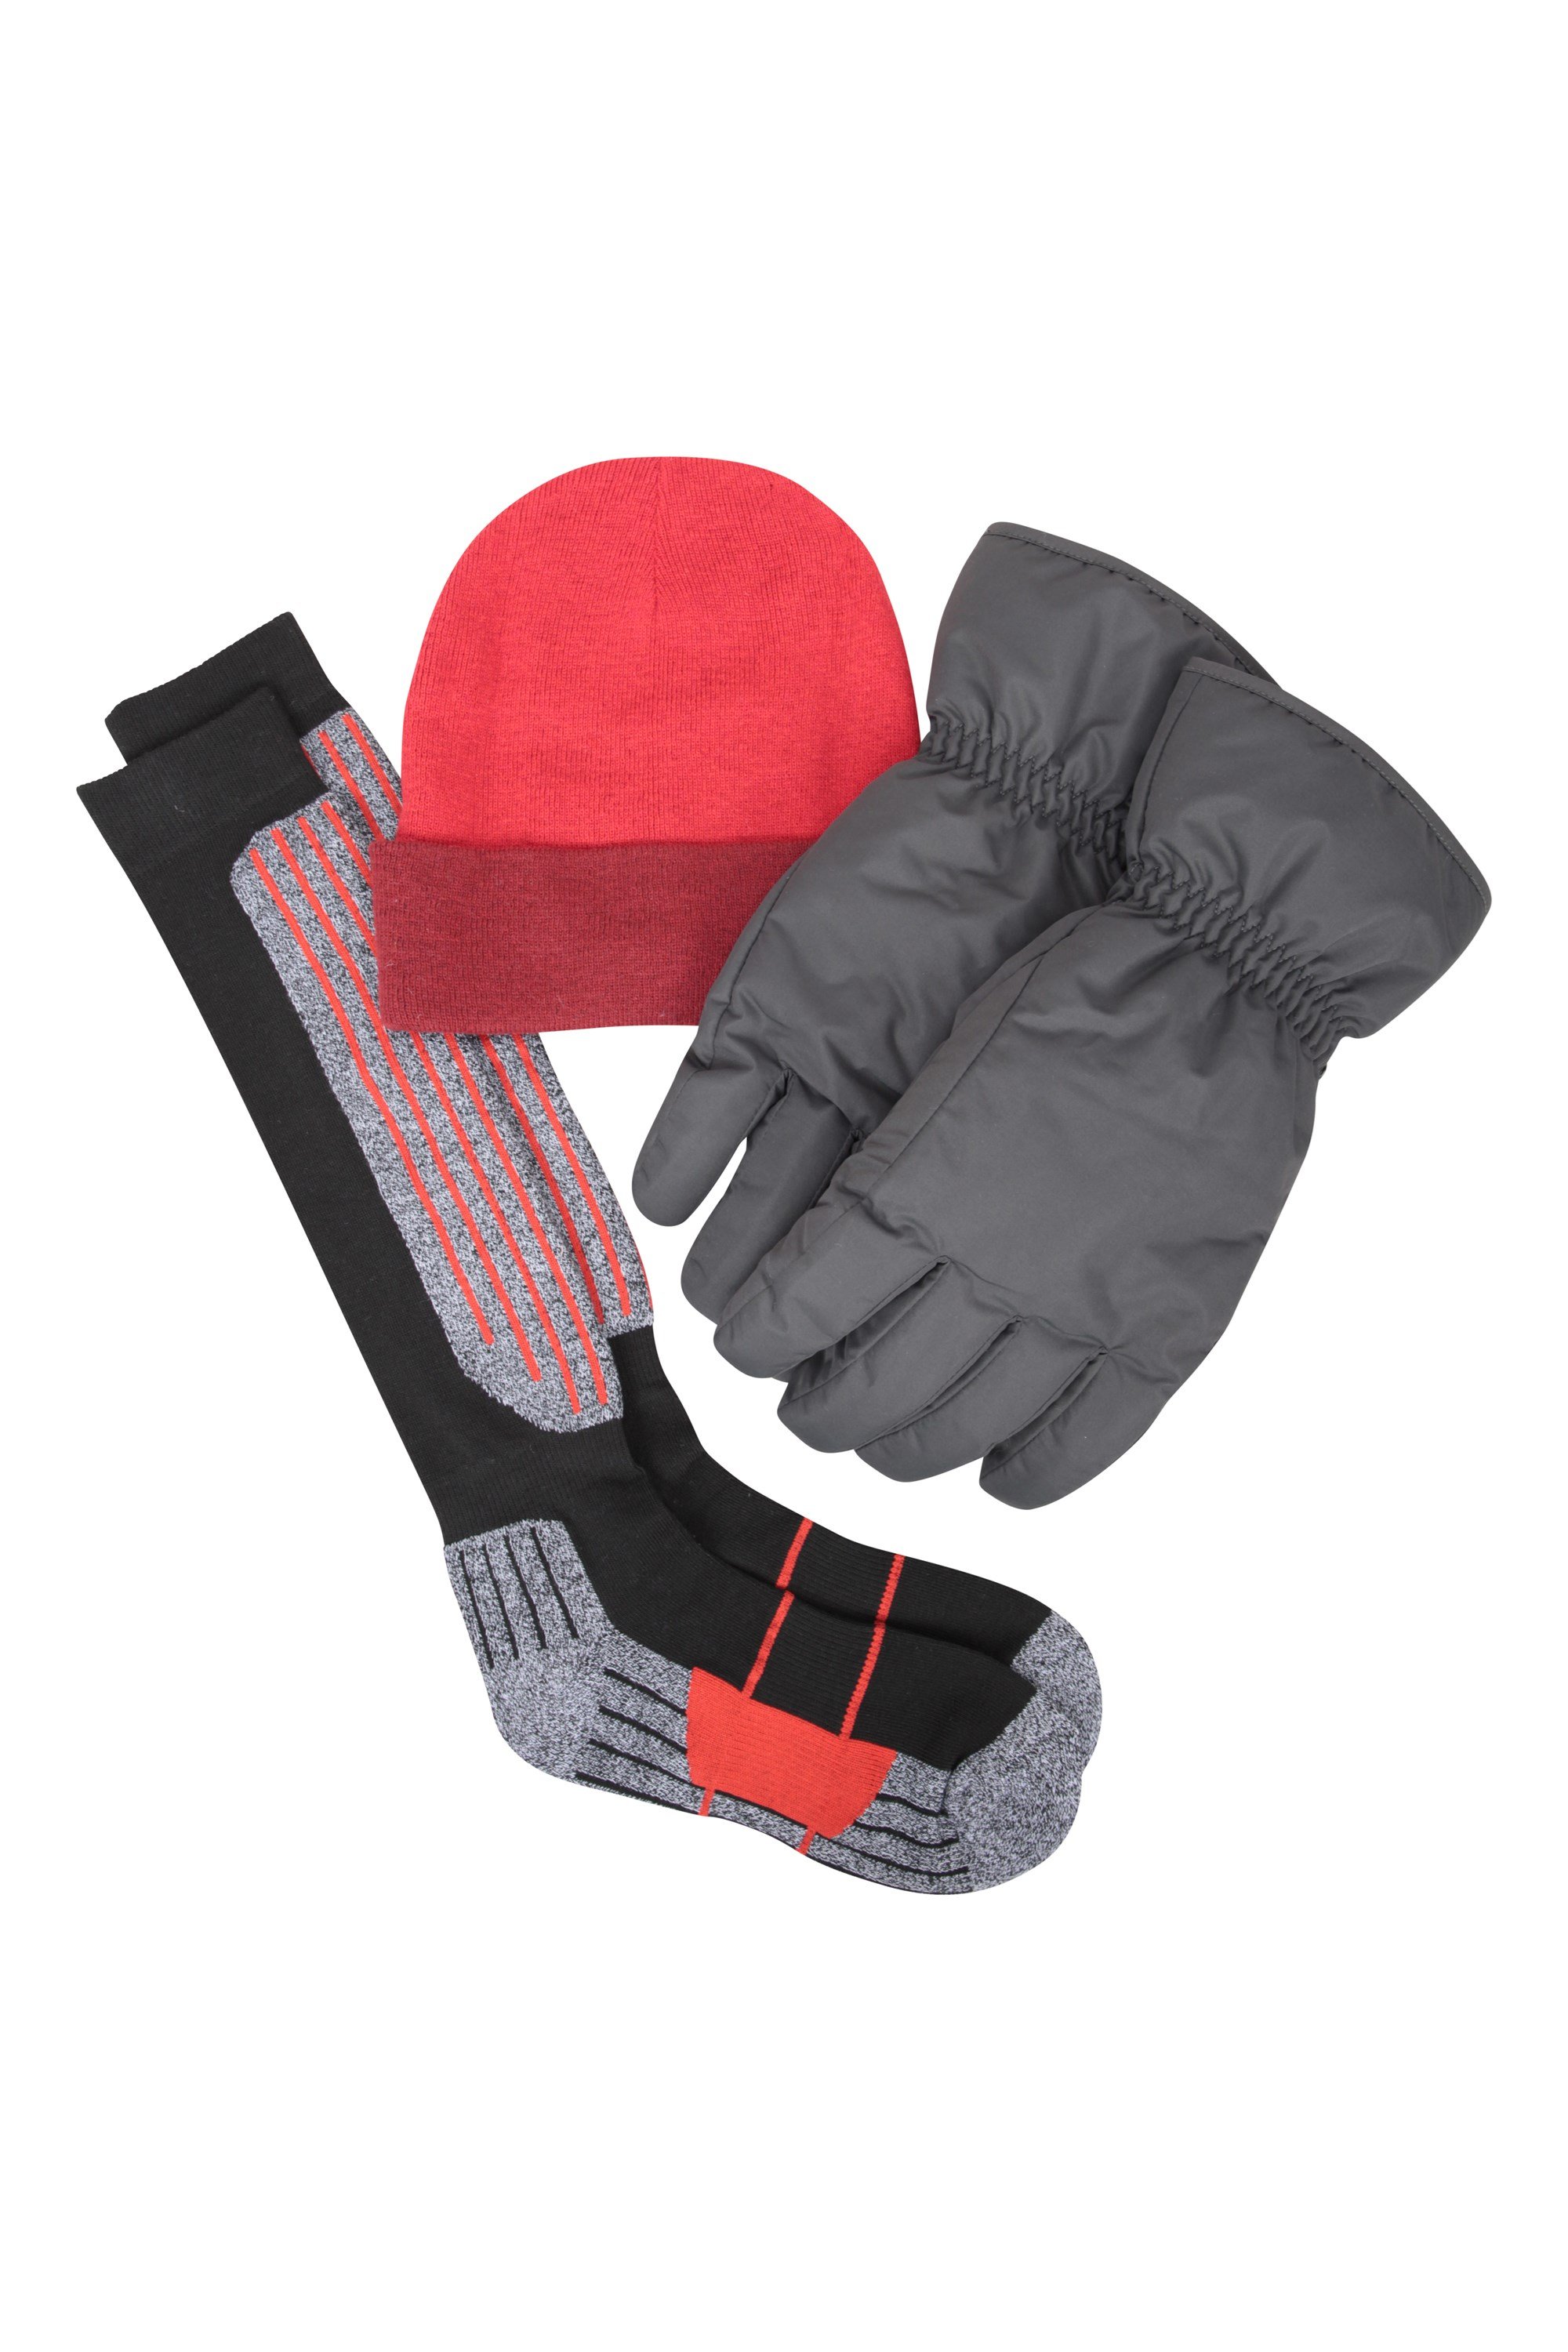 Mens Winter Accessories Set - Red